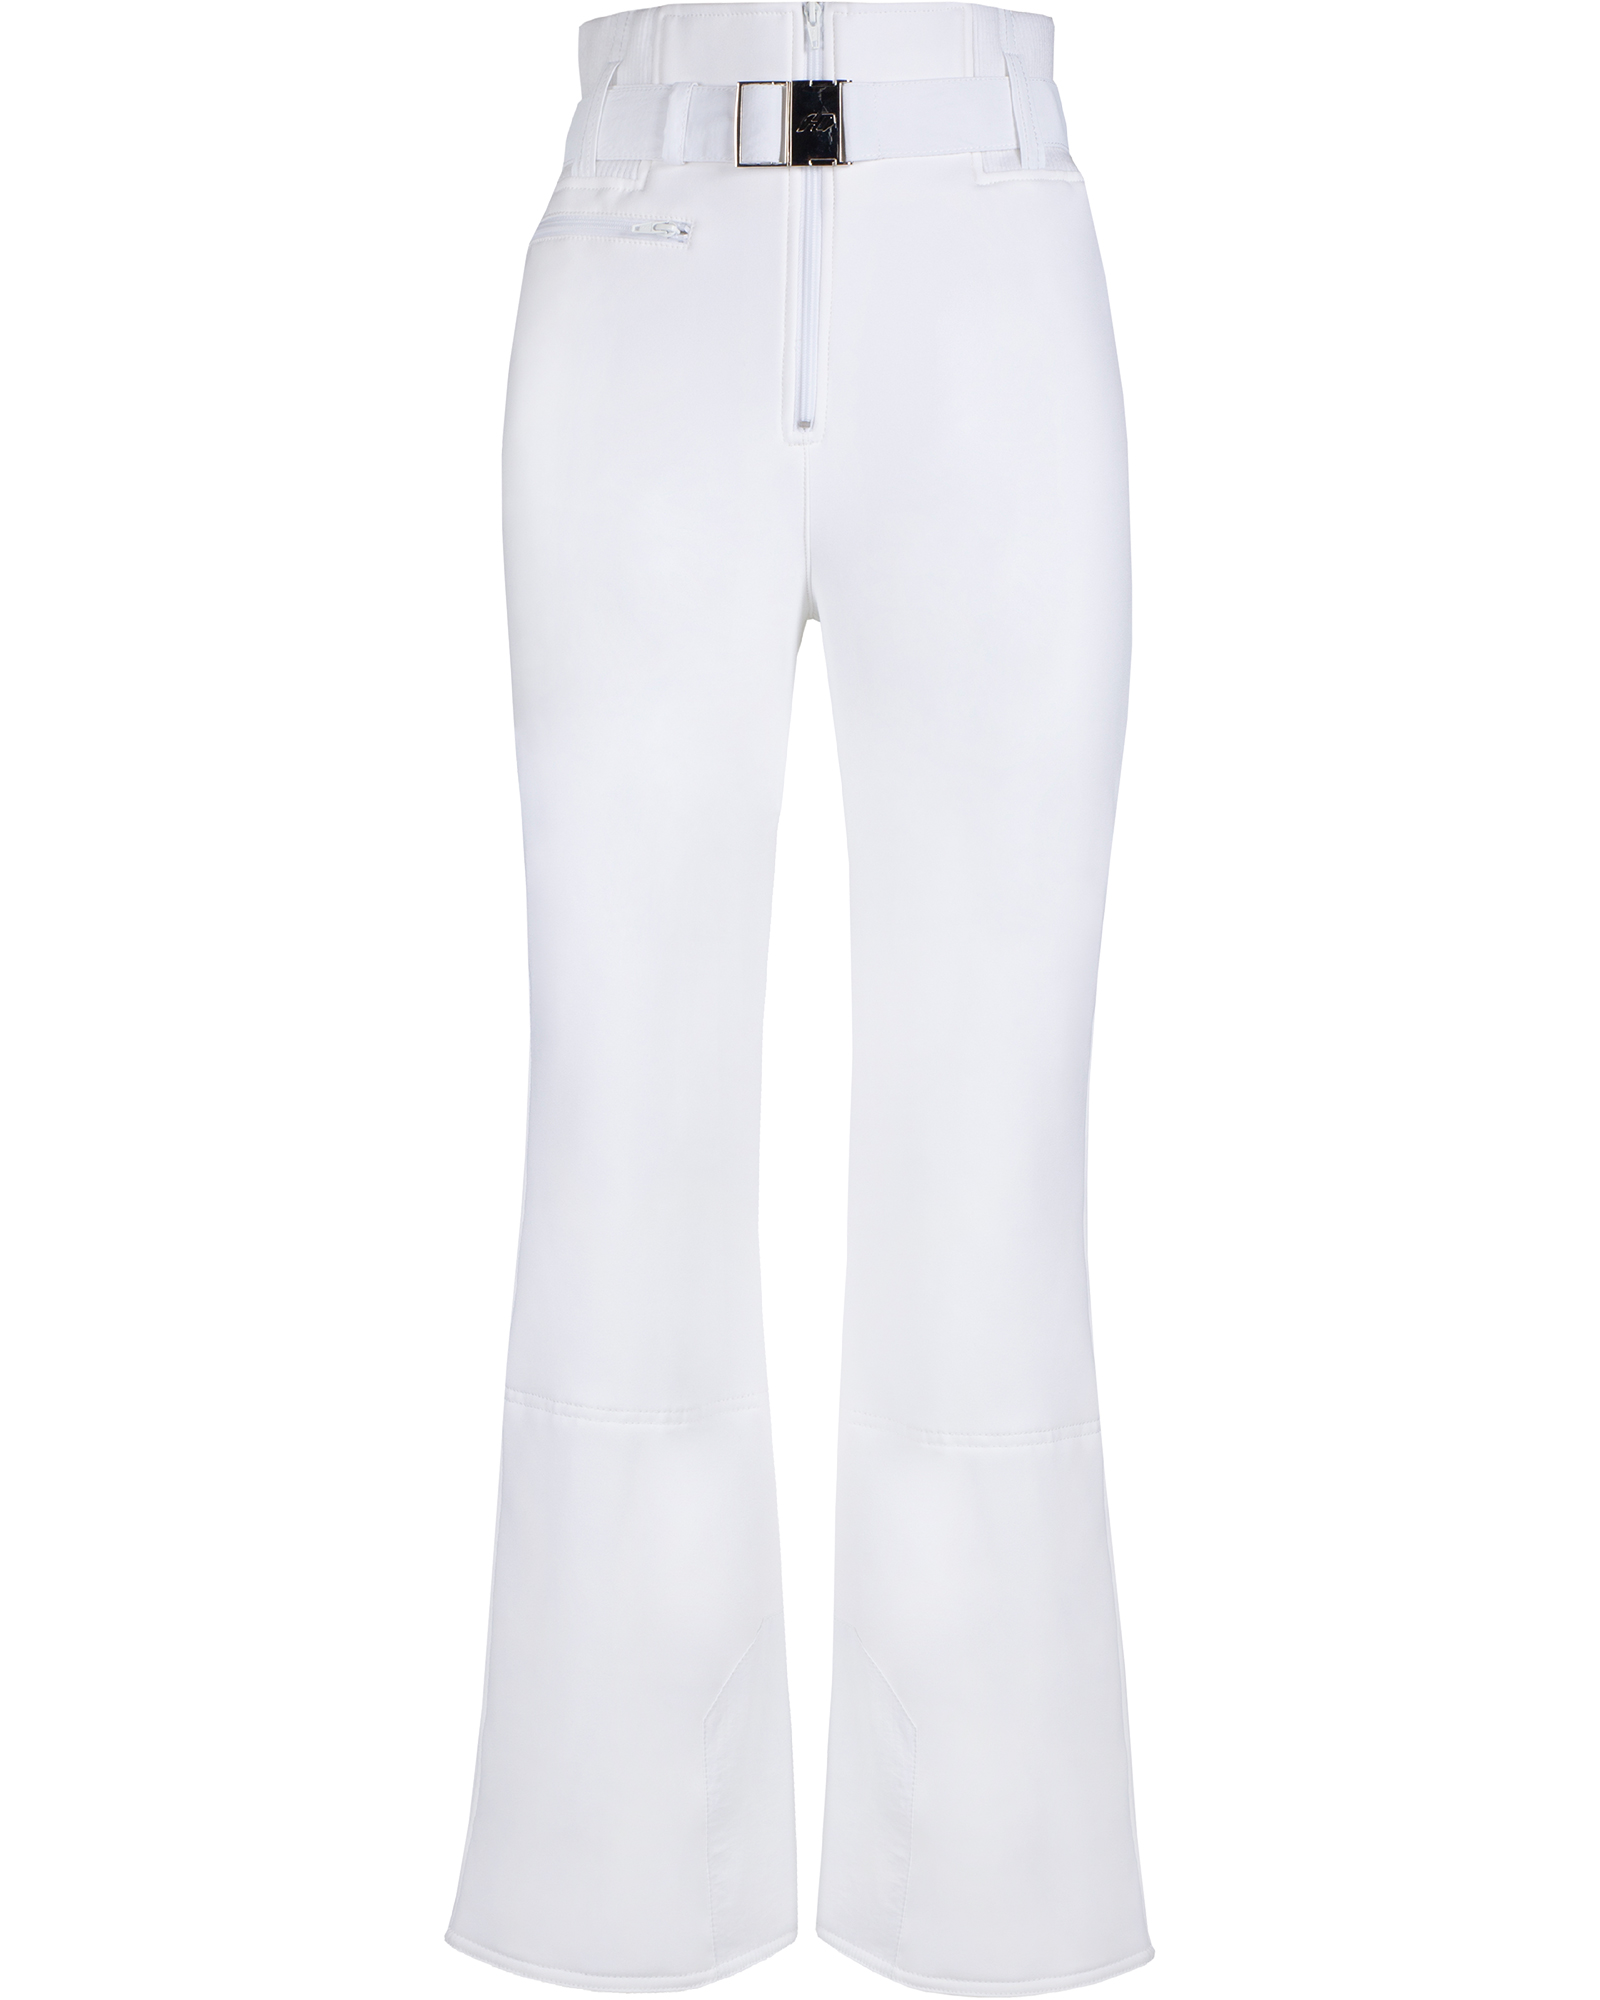 Duvillard Gridin Women’s Pants - White 12